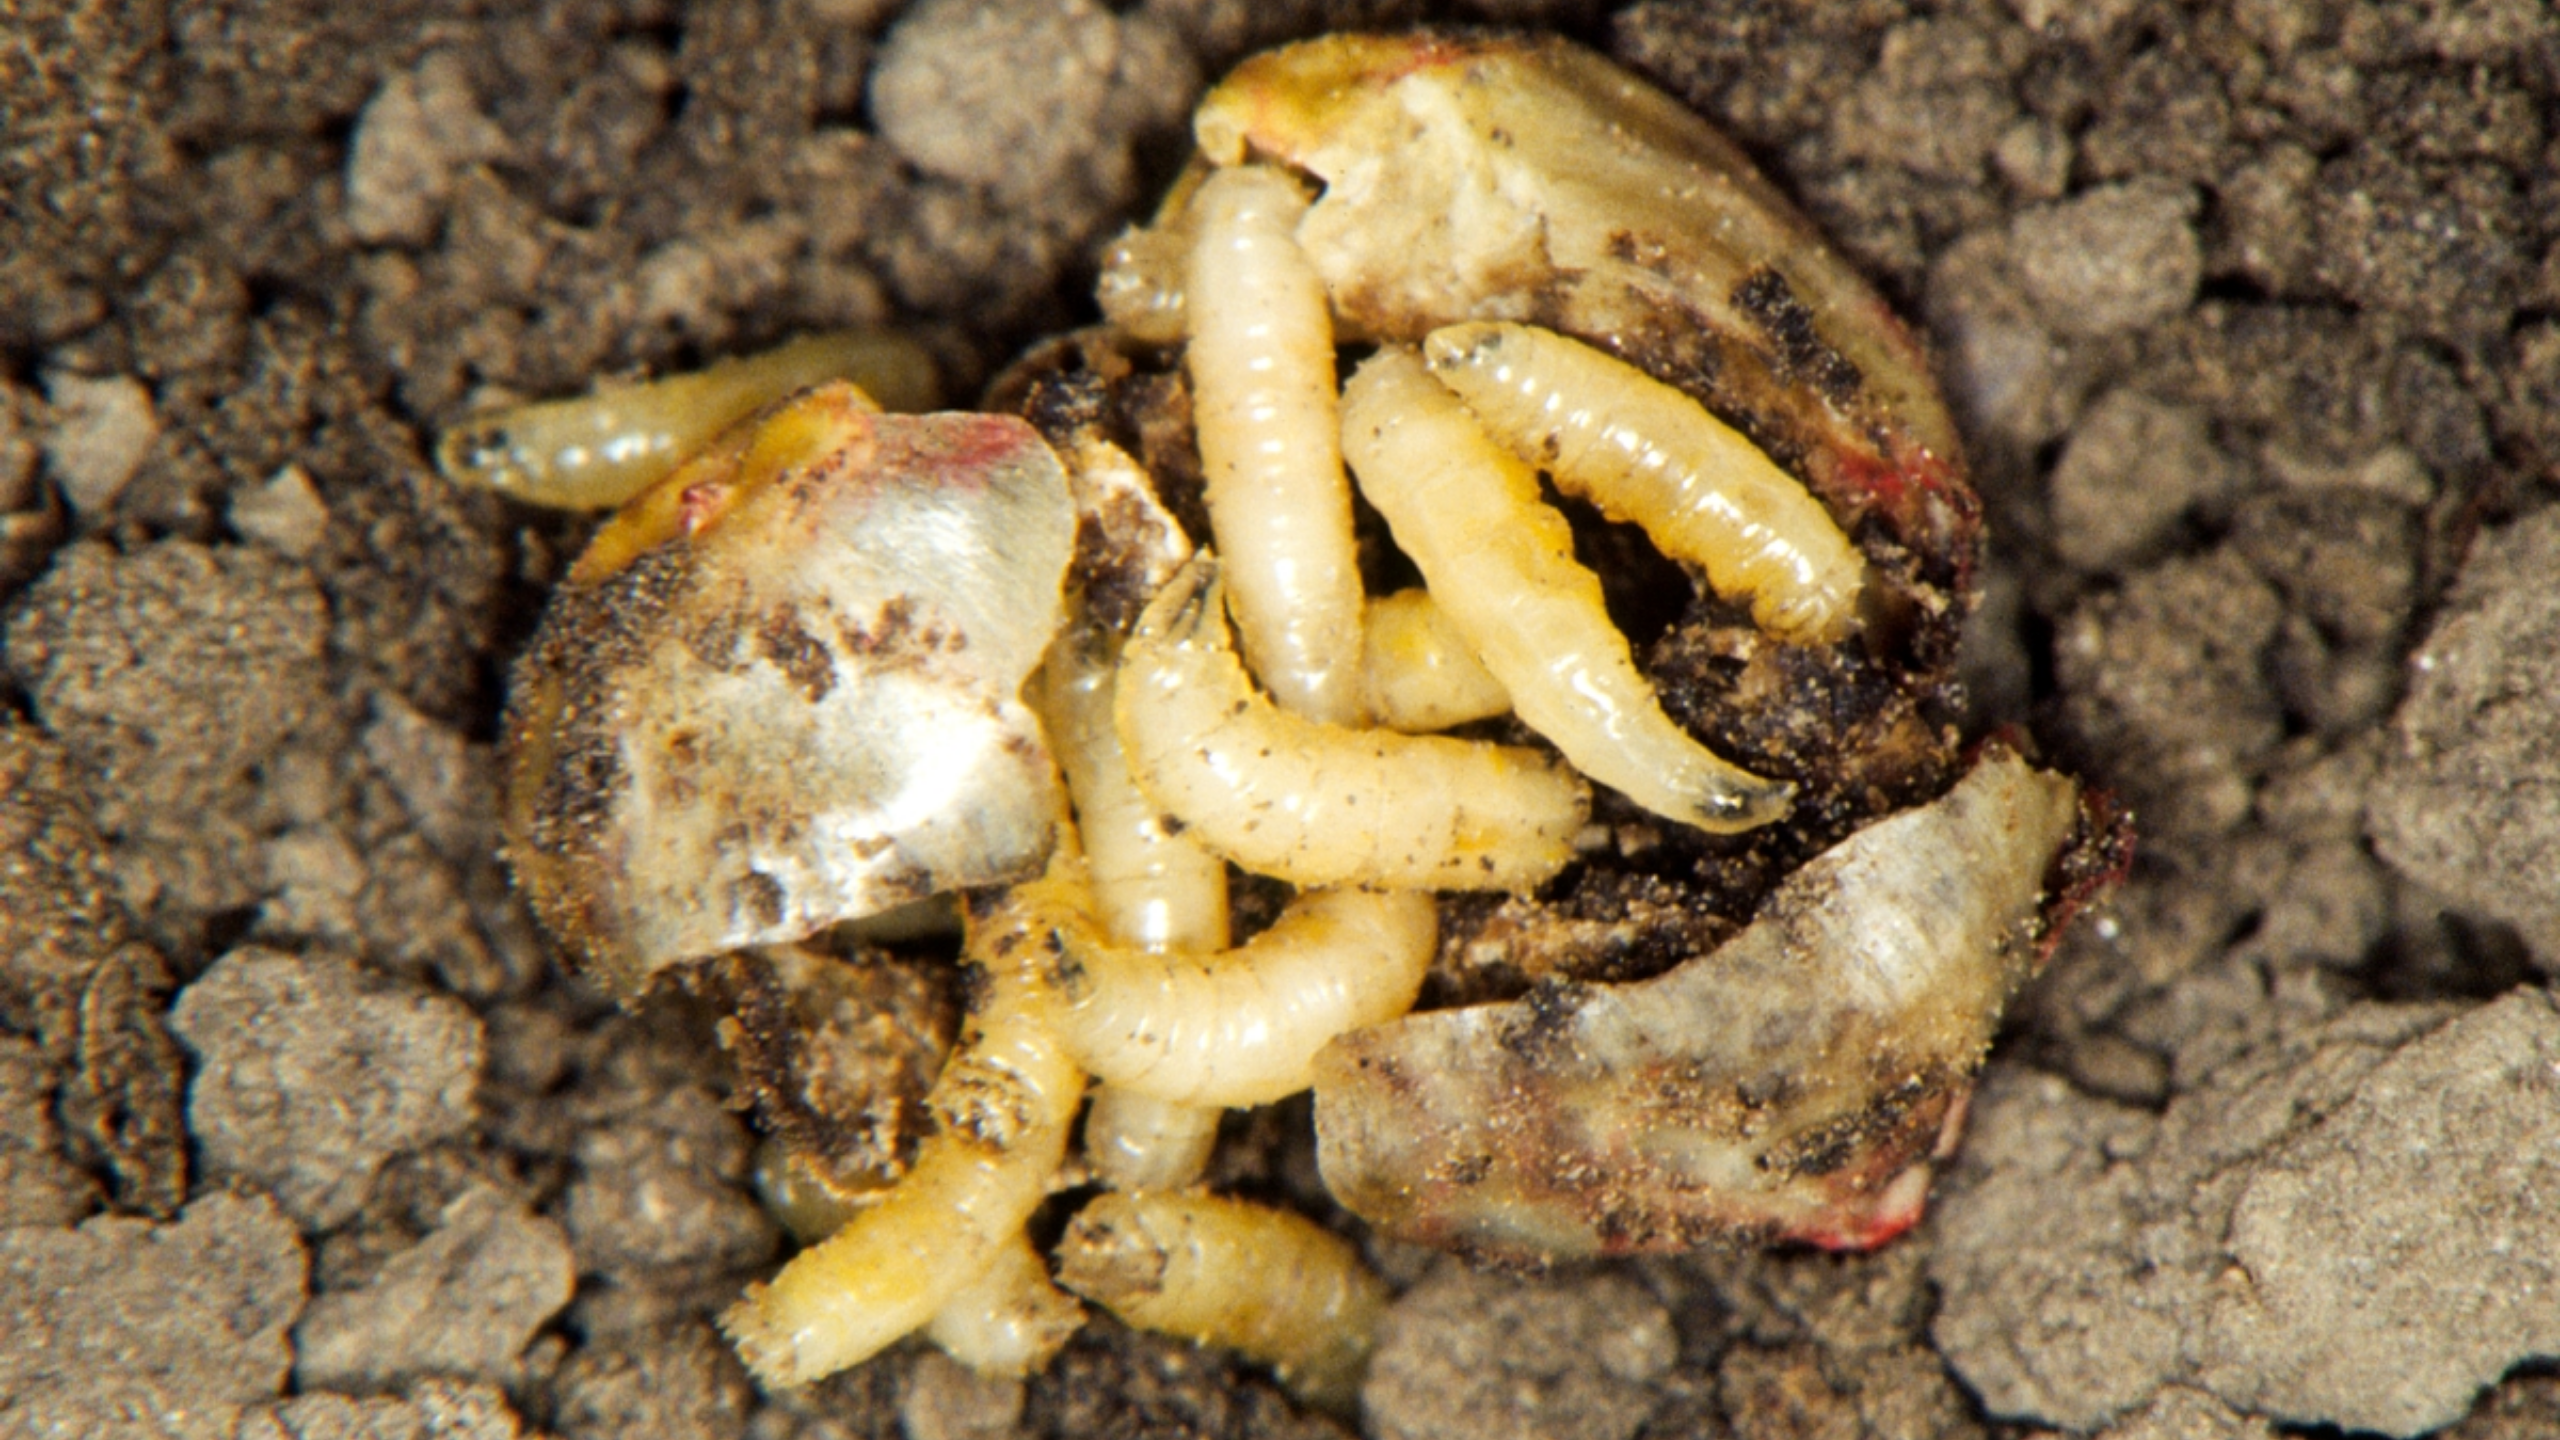 Seedcorn Maggot